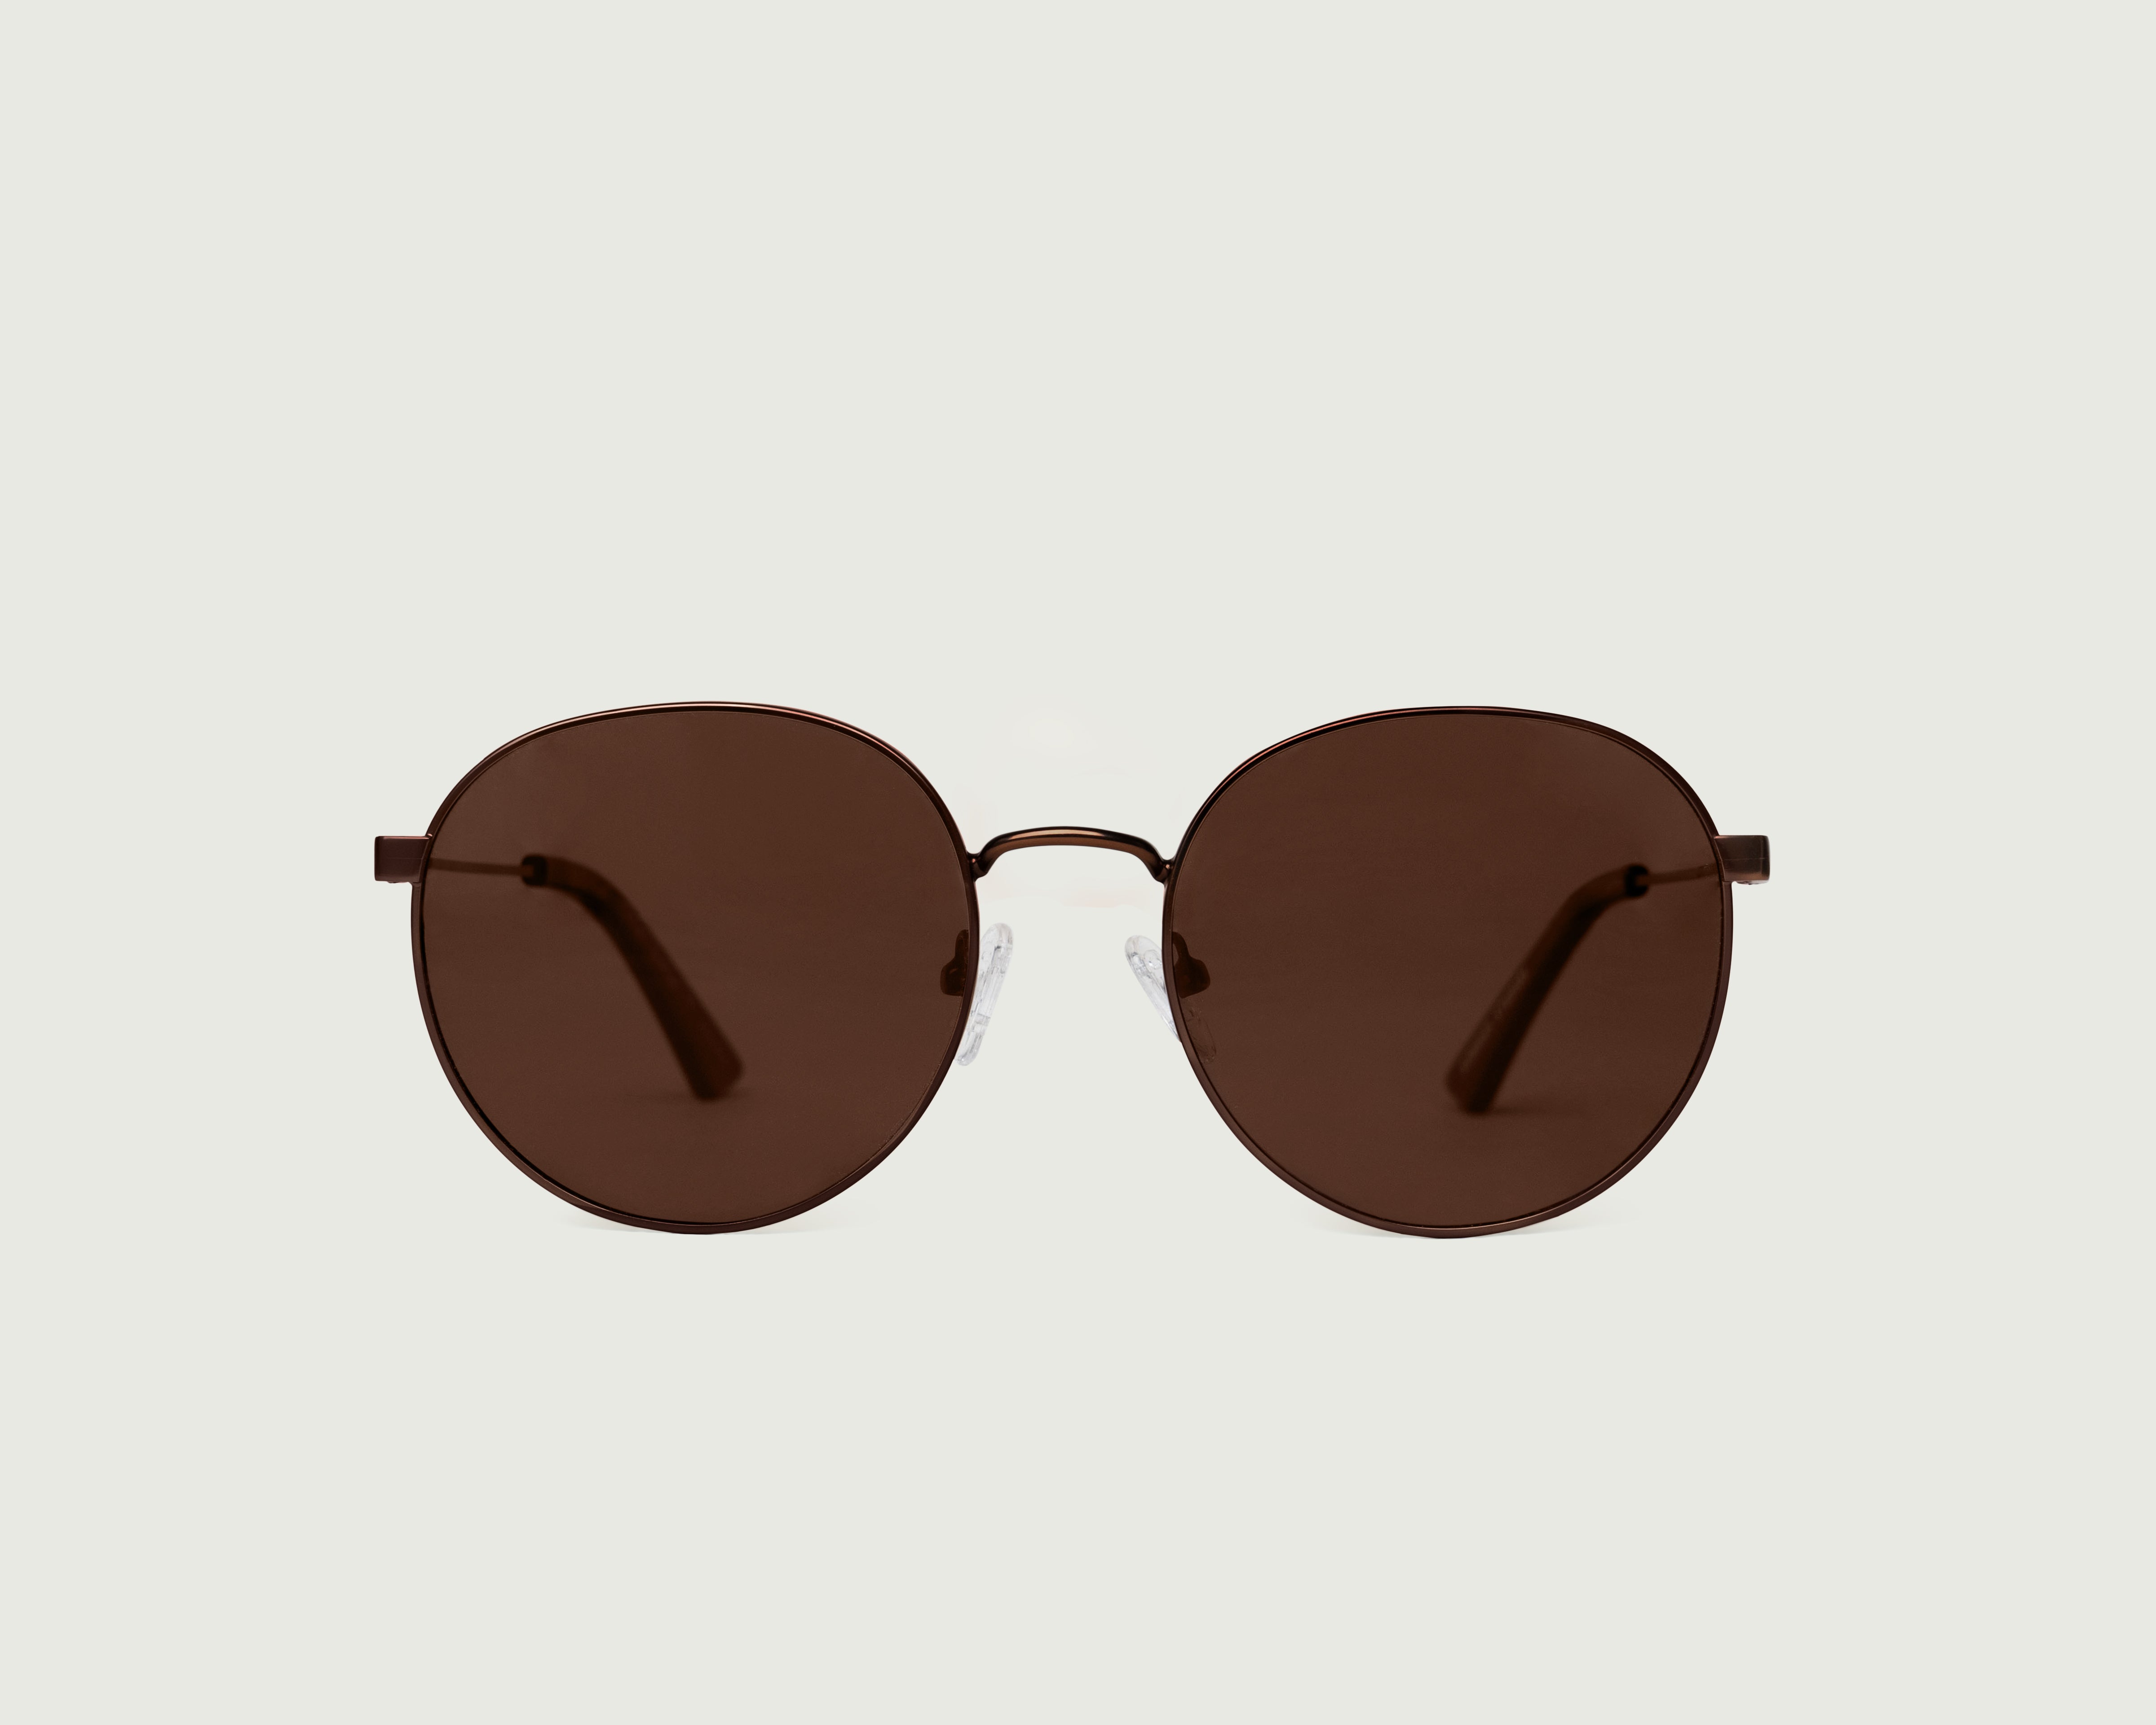 Bronze Polarized::Leon Sunglasses round brown metal front